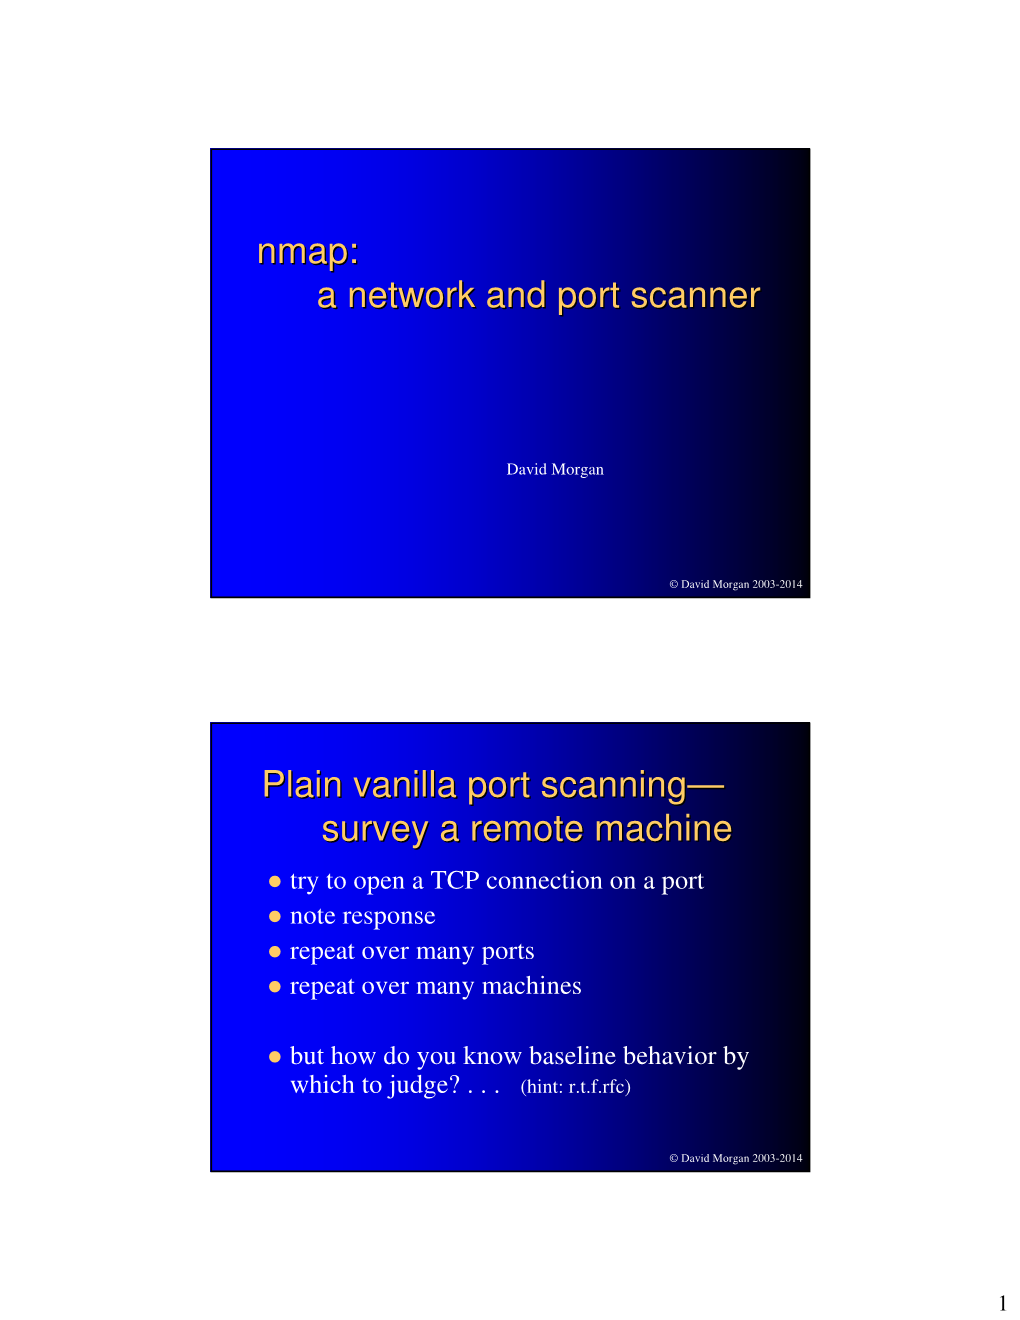 Nmap: a Network and Port Scanner Plain Vanilla Port Scanning